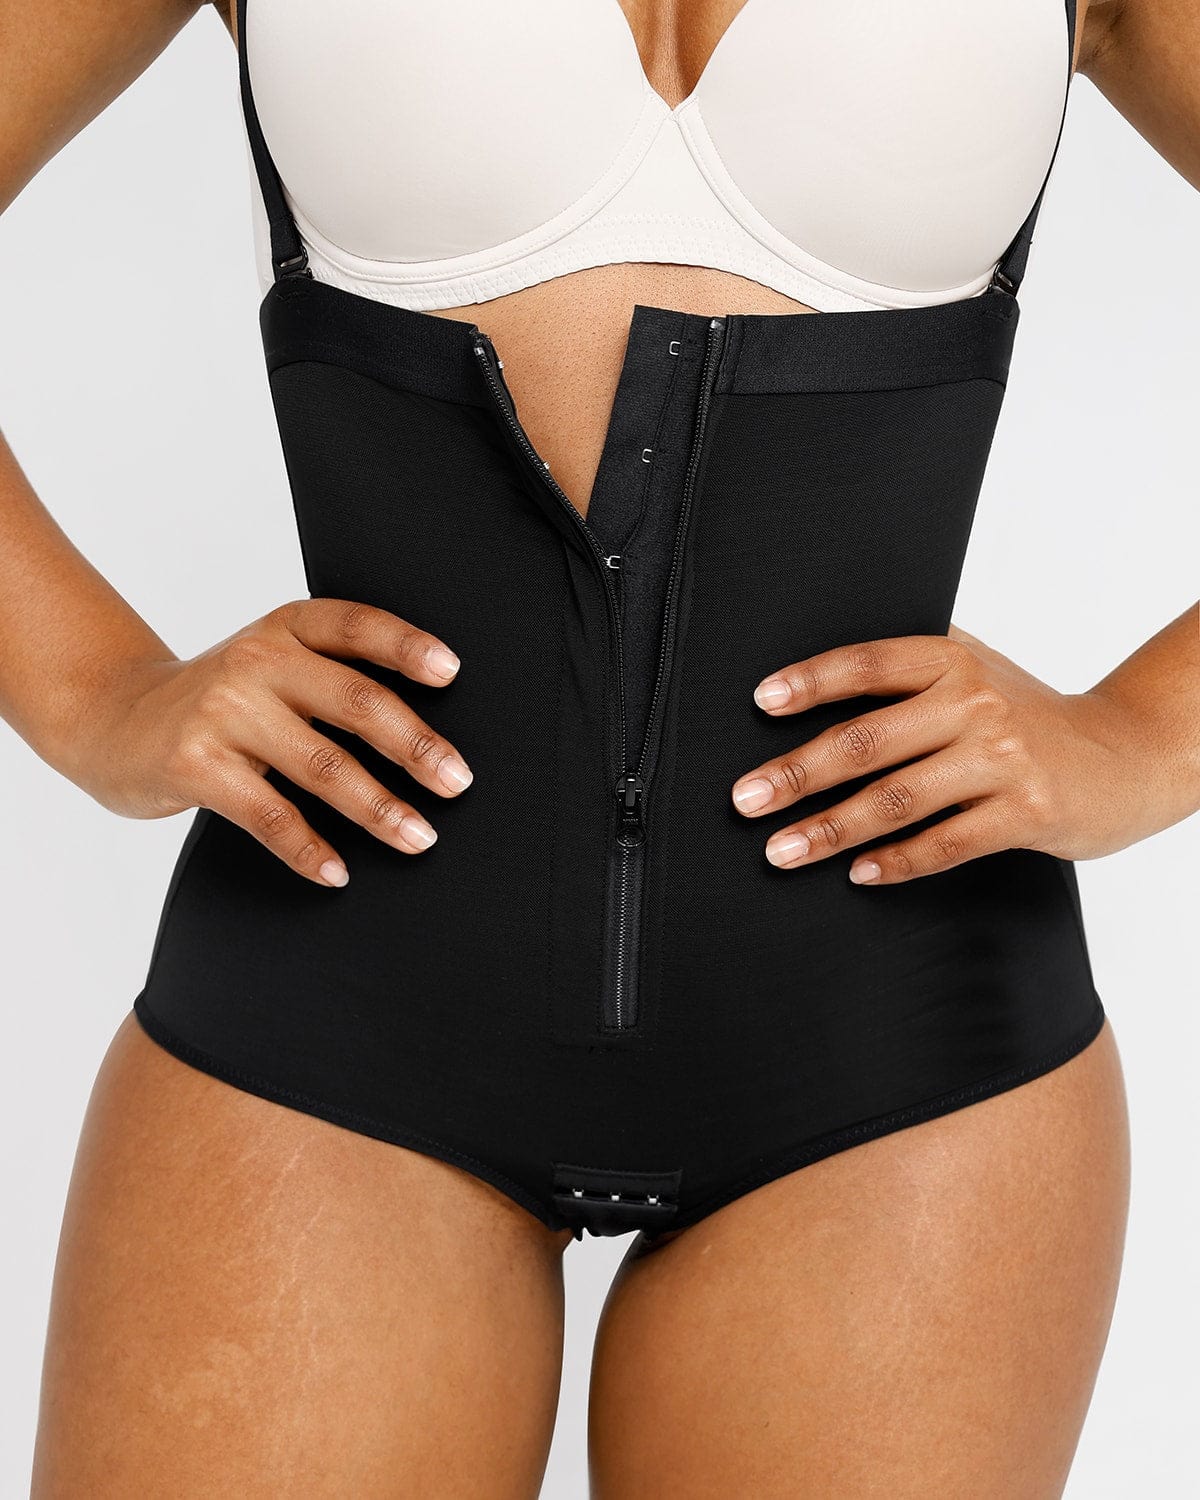 LEAPAIR Women's Extra Firm Smooth Hi-Waist Brief Shapewear Waist Trainer  Cincher Tummy Control Panties Body Shaper Shaping Short